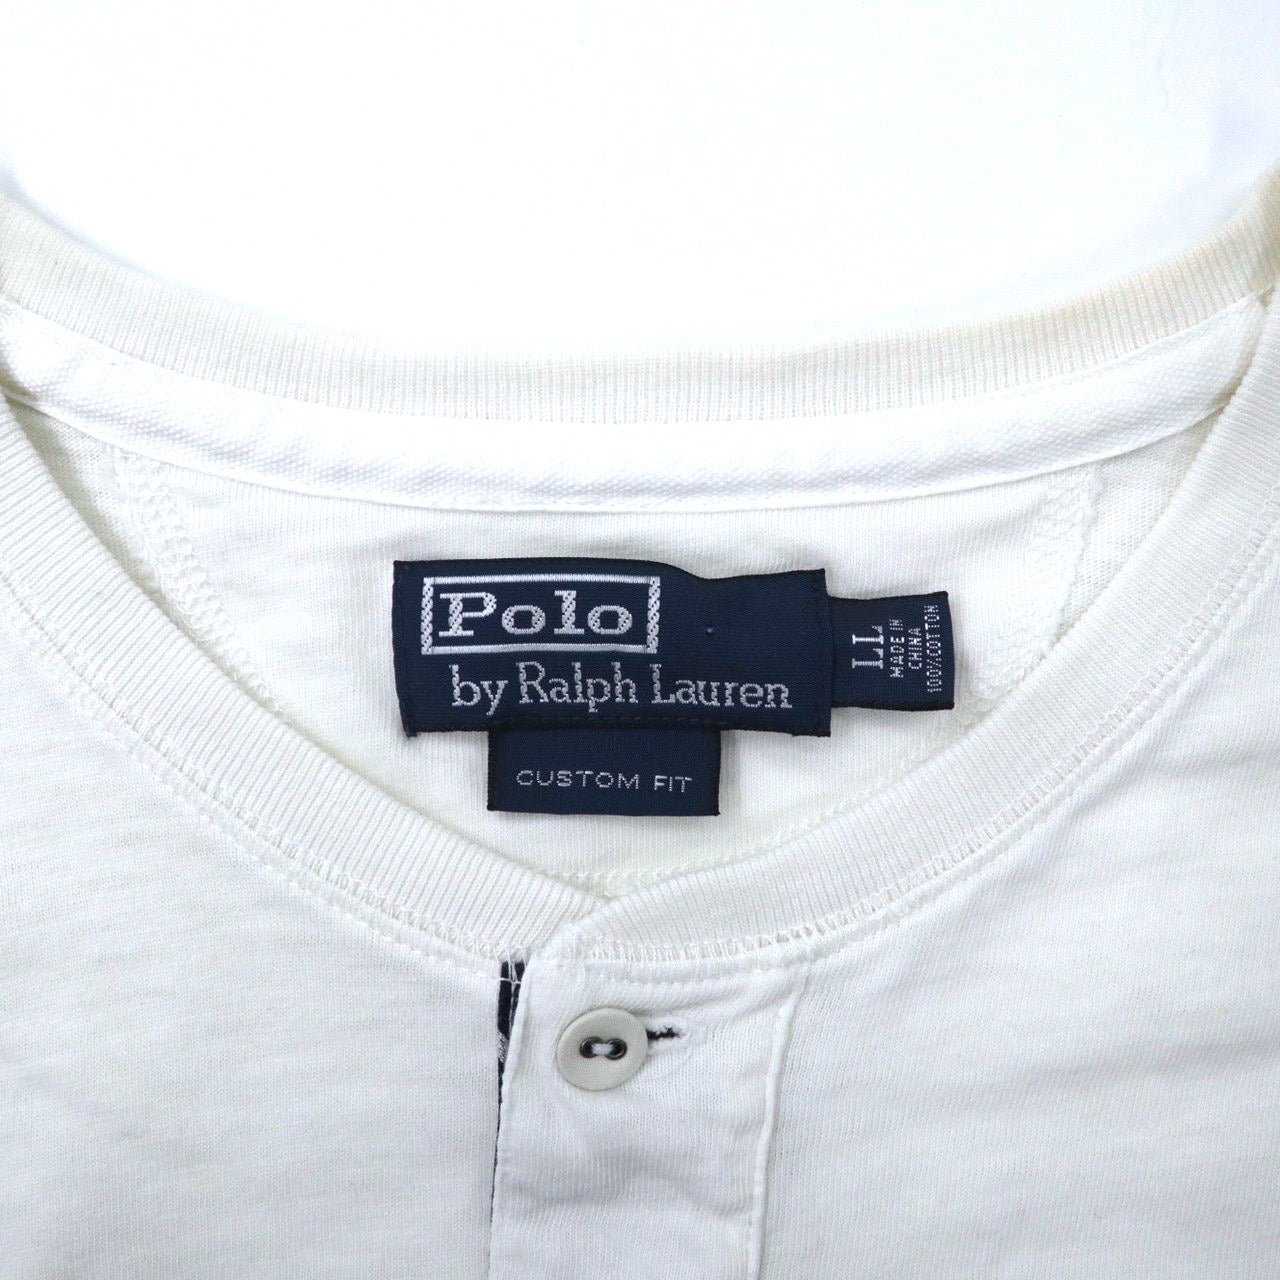 Polo by Ralph Lauren ヘンリーネックTシャツ LL ホワイト コットン 染み込みプリント ナンバリング CUSTOM FIT